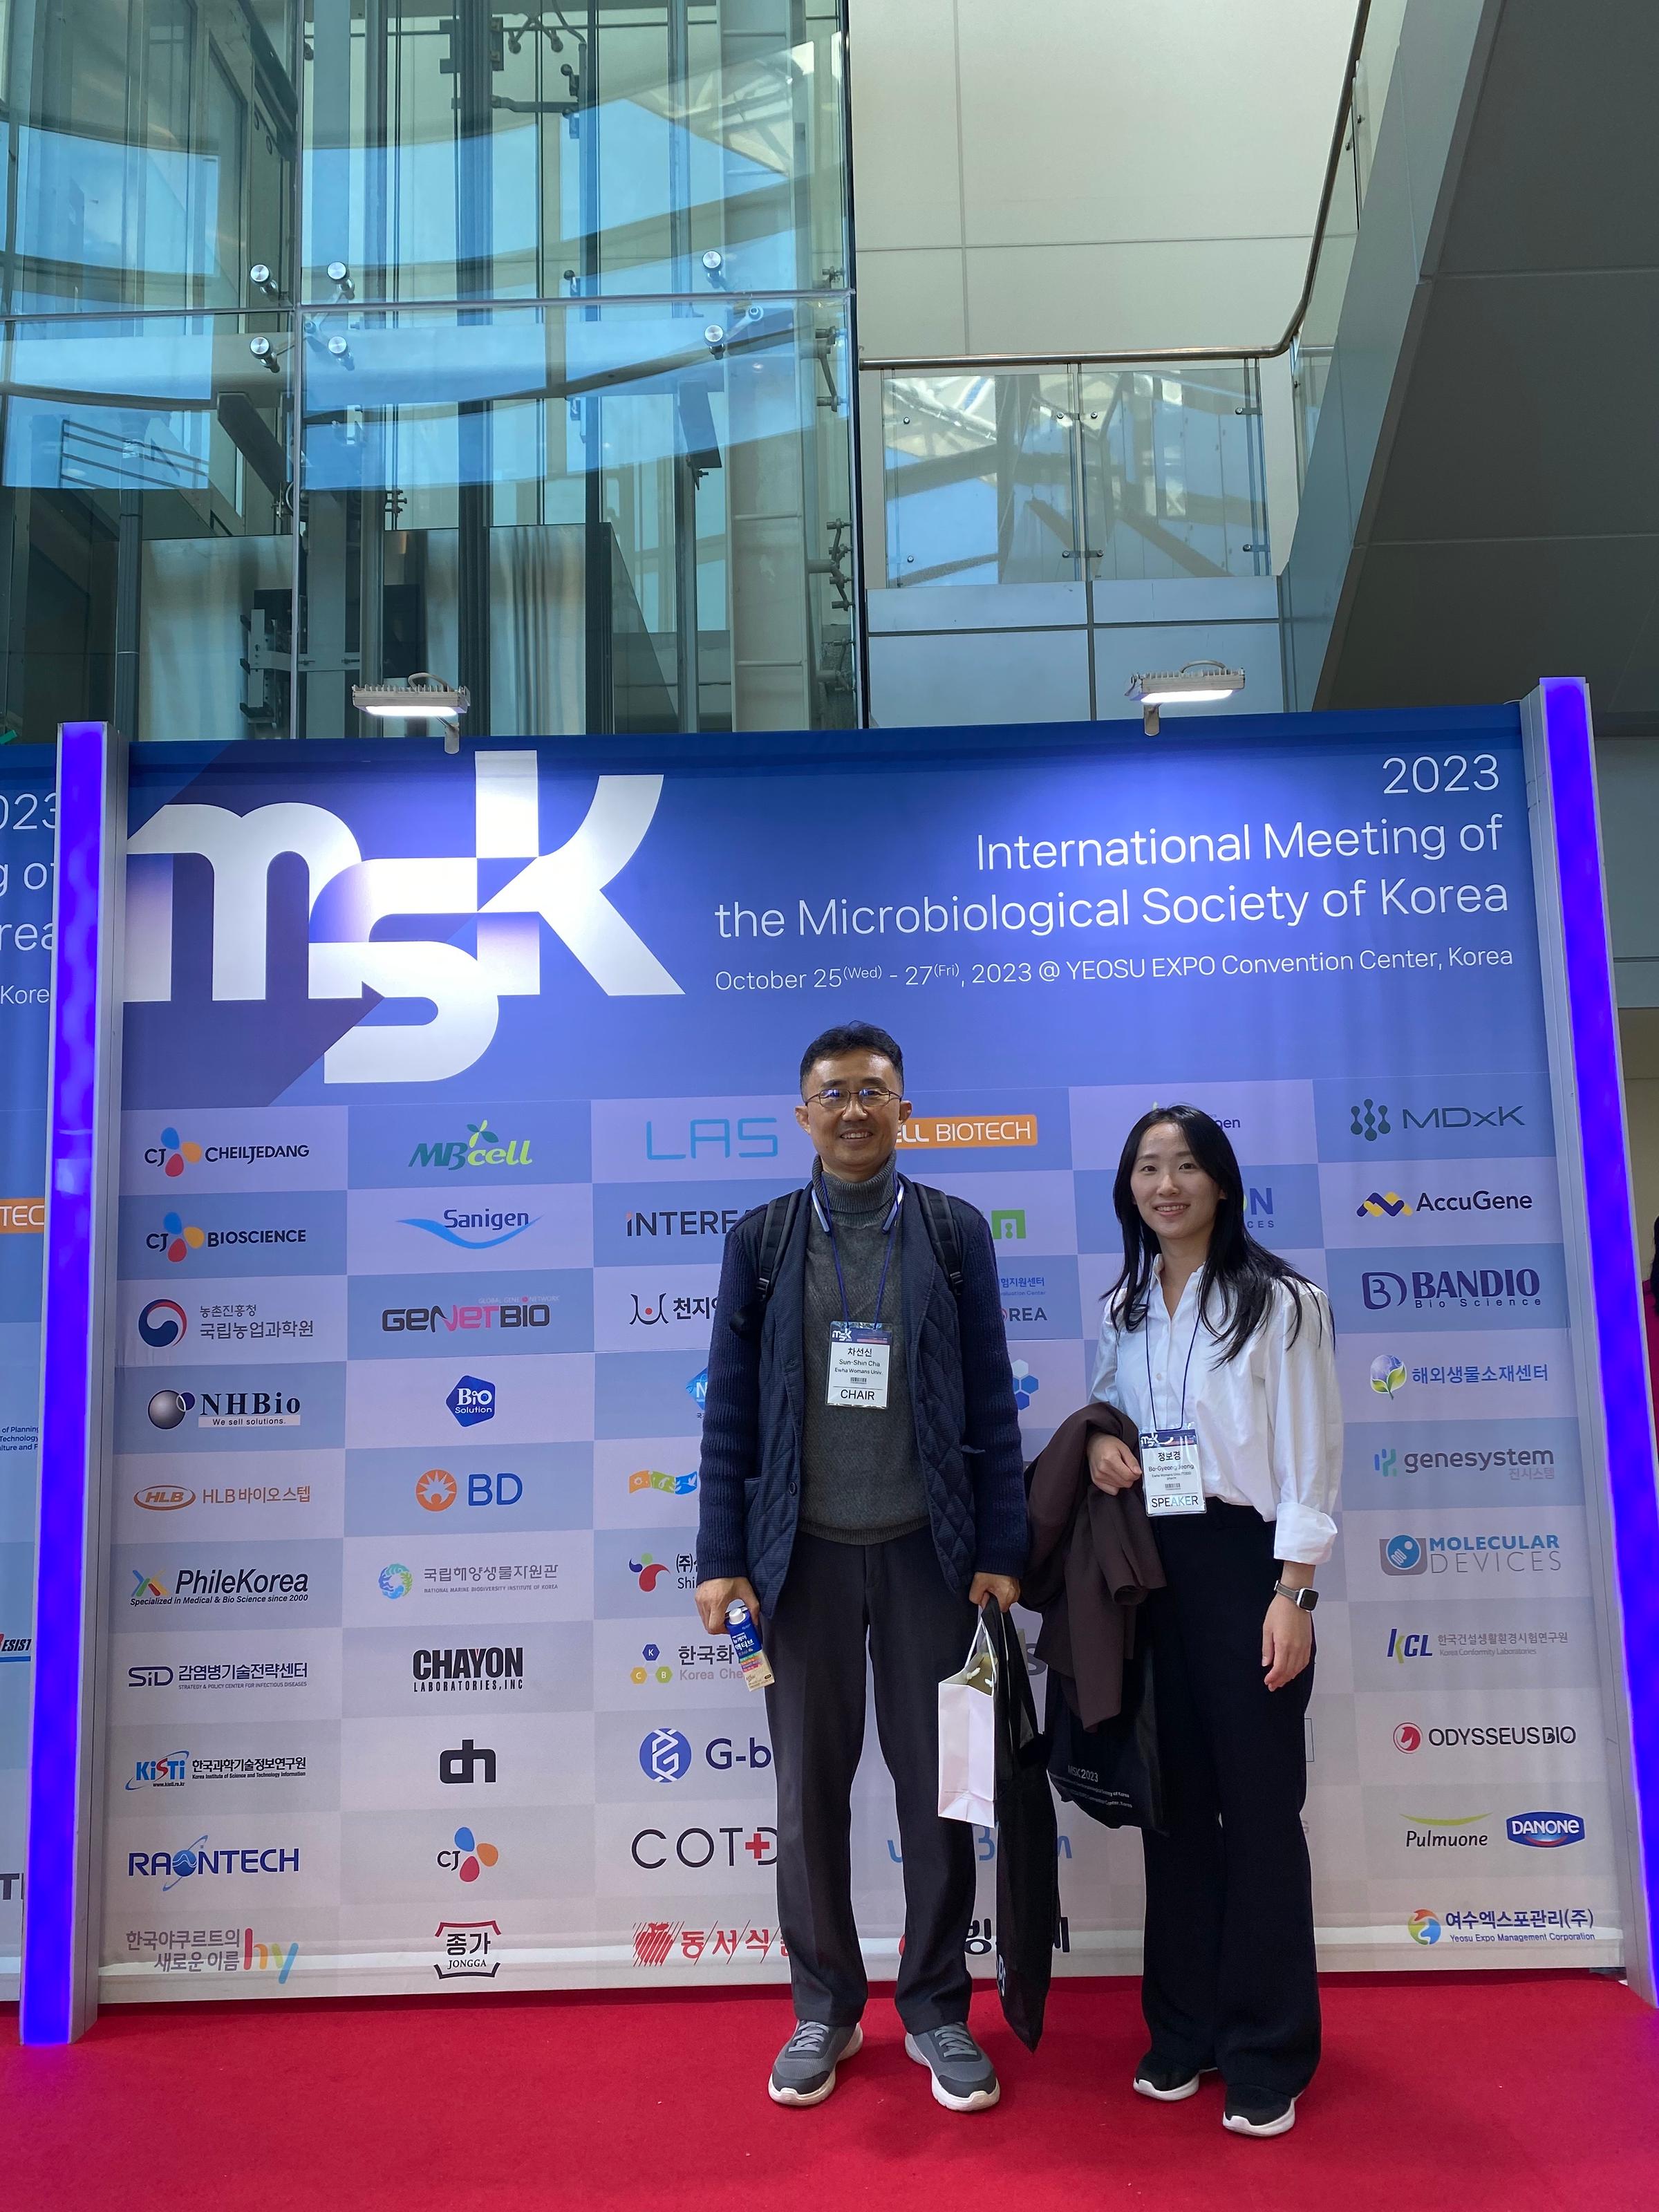 23.10.25-27 MSK 2023; International Meeting of the Microbiological Society of Korea, Yeosu